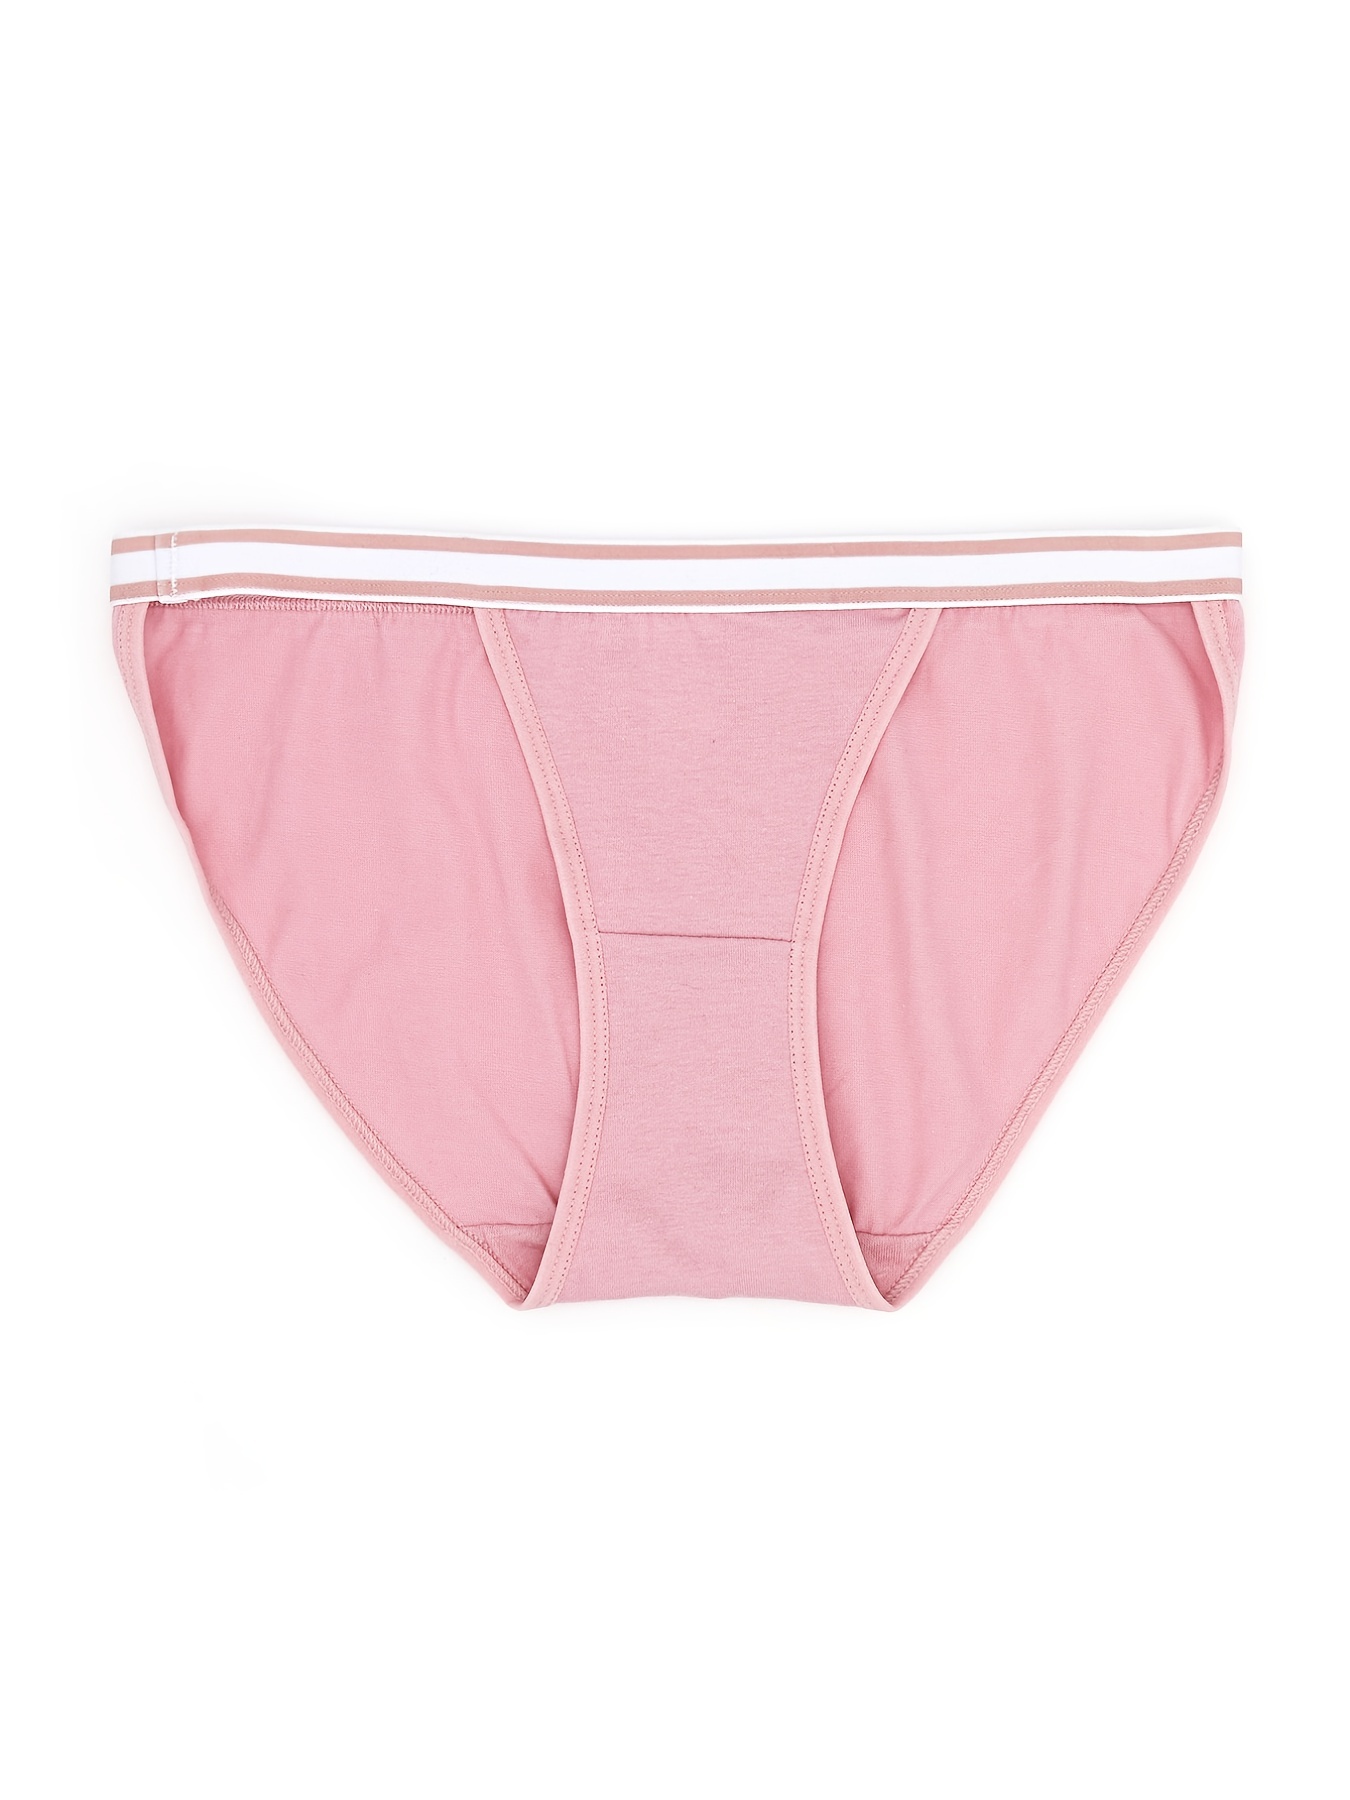 Ladies Cotton Underwear Cute Panties For Women Cotton Thong